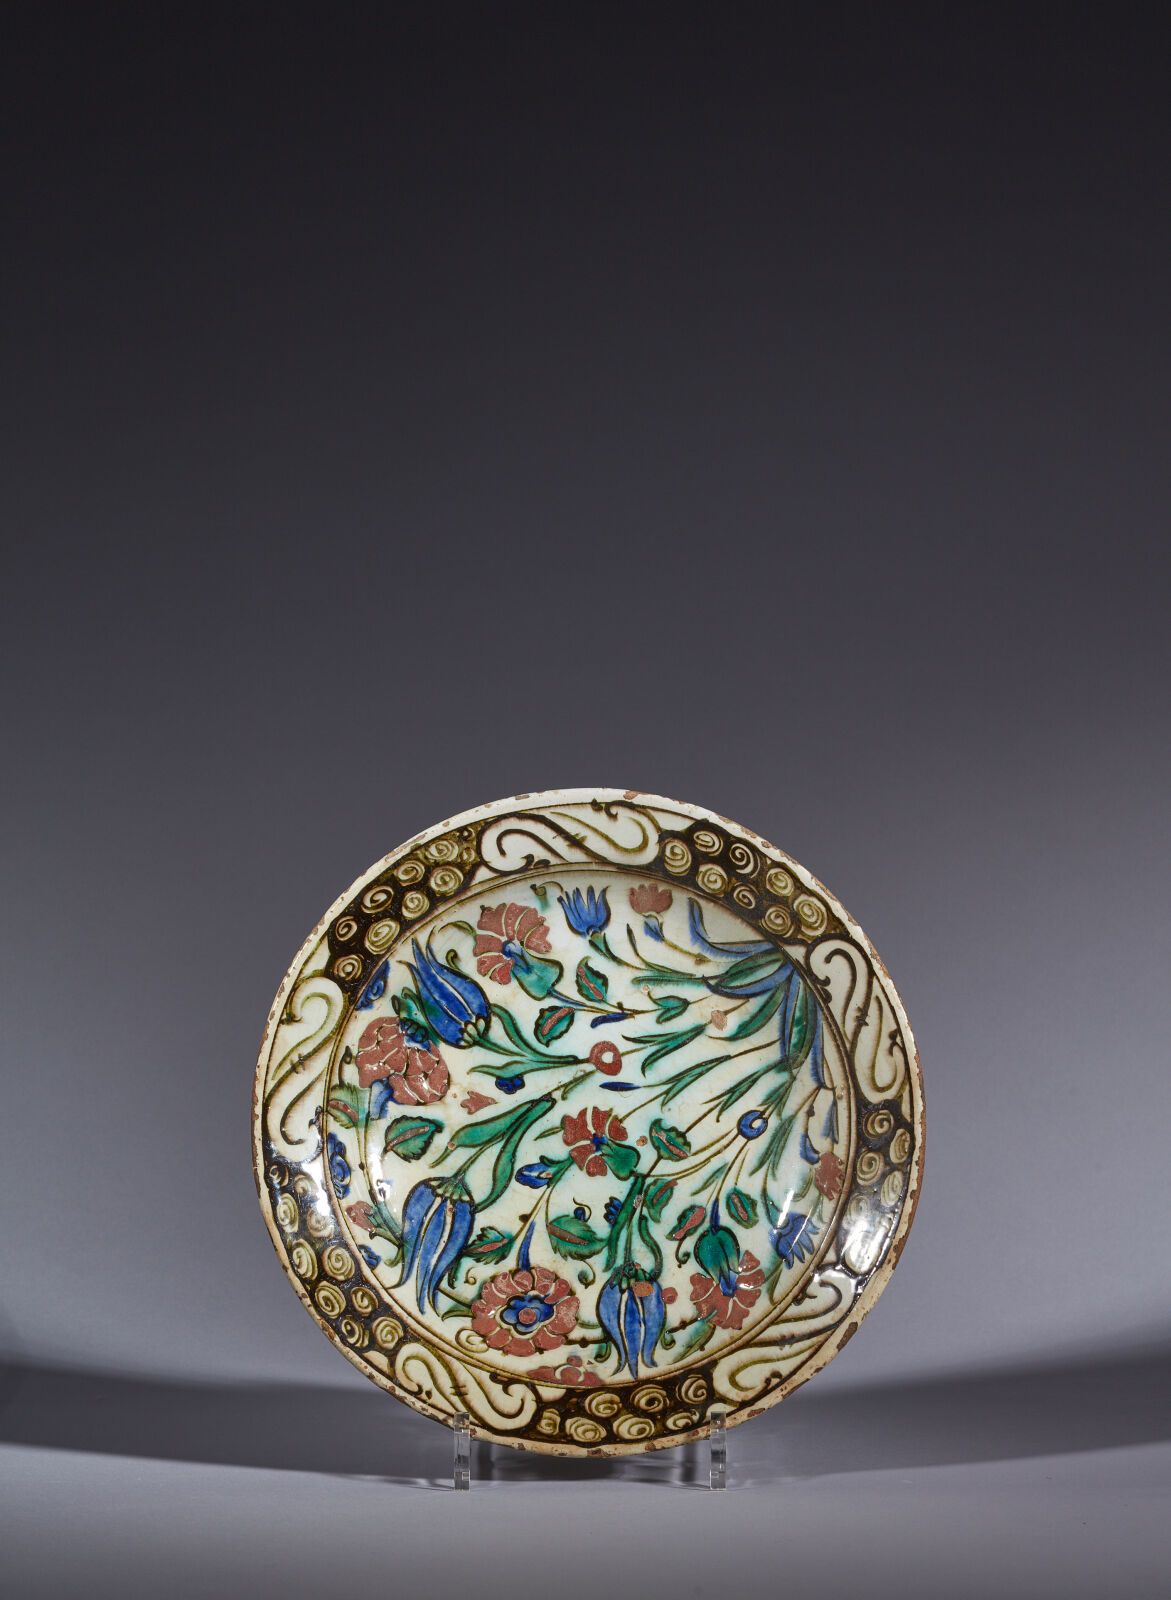 Null Ottoman TURKEY, Iznik, 17th century
Dish with floral decoration
Small silic&hellip;